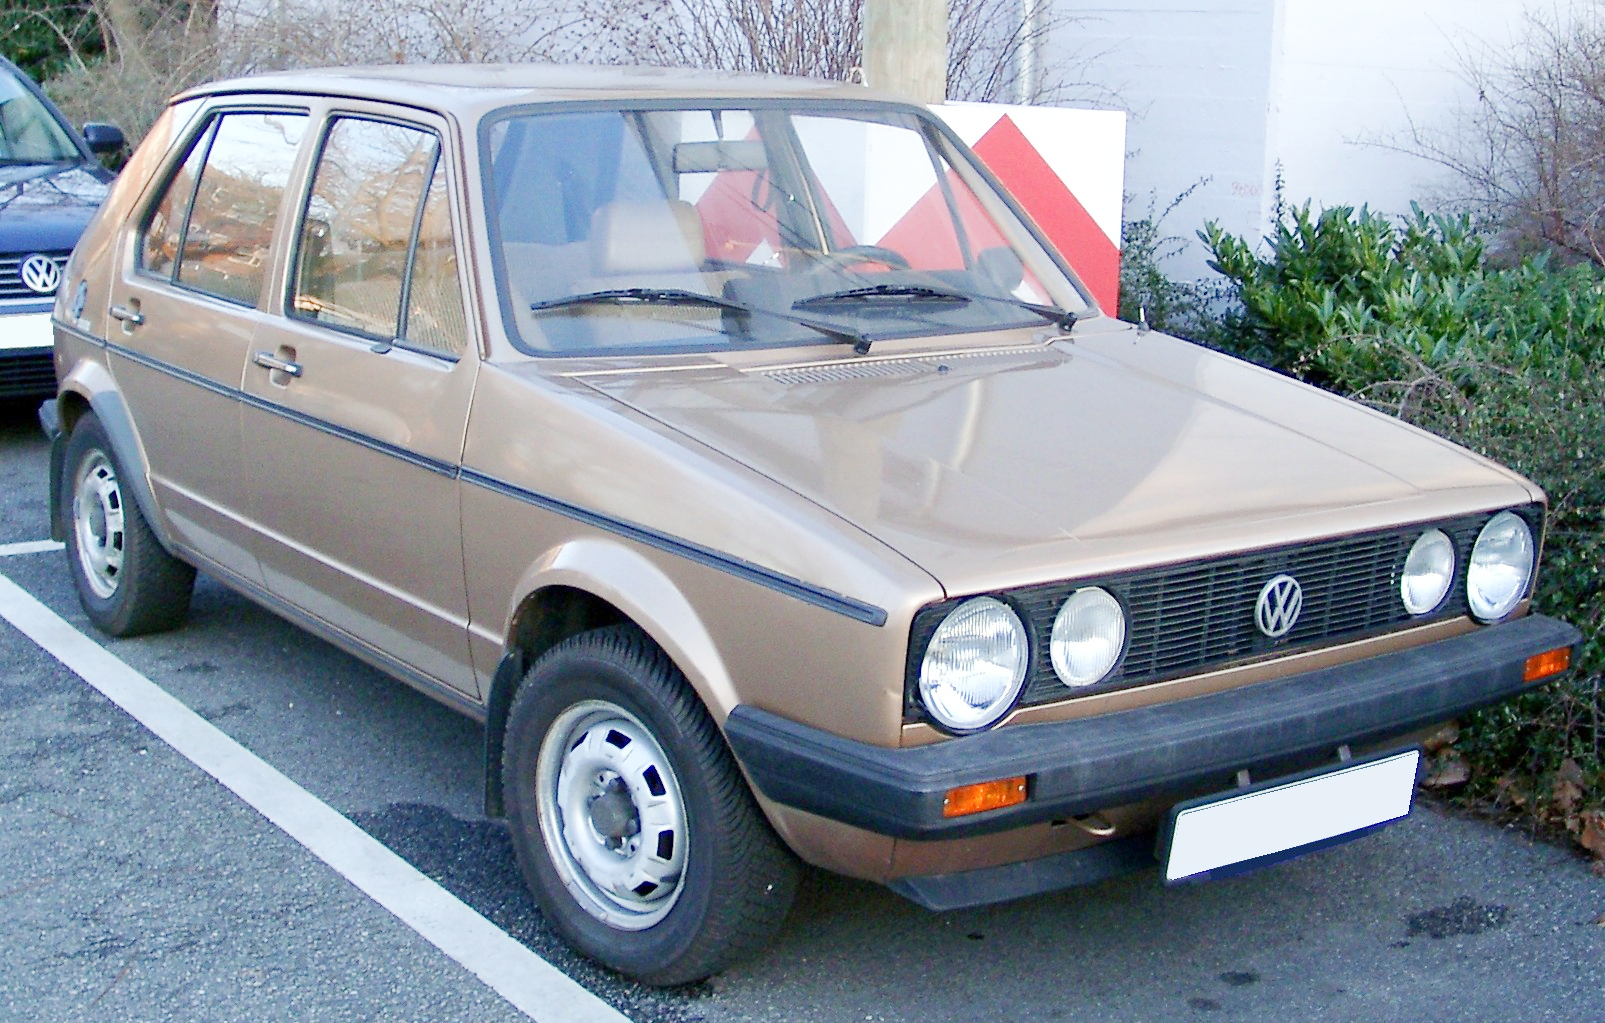 VW, Volkswagen, Citi Golf, Citi, Golf, Mark 1, Mk1, Rabbit, R, 1987